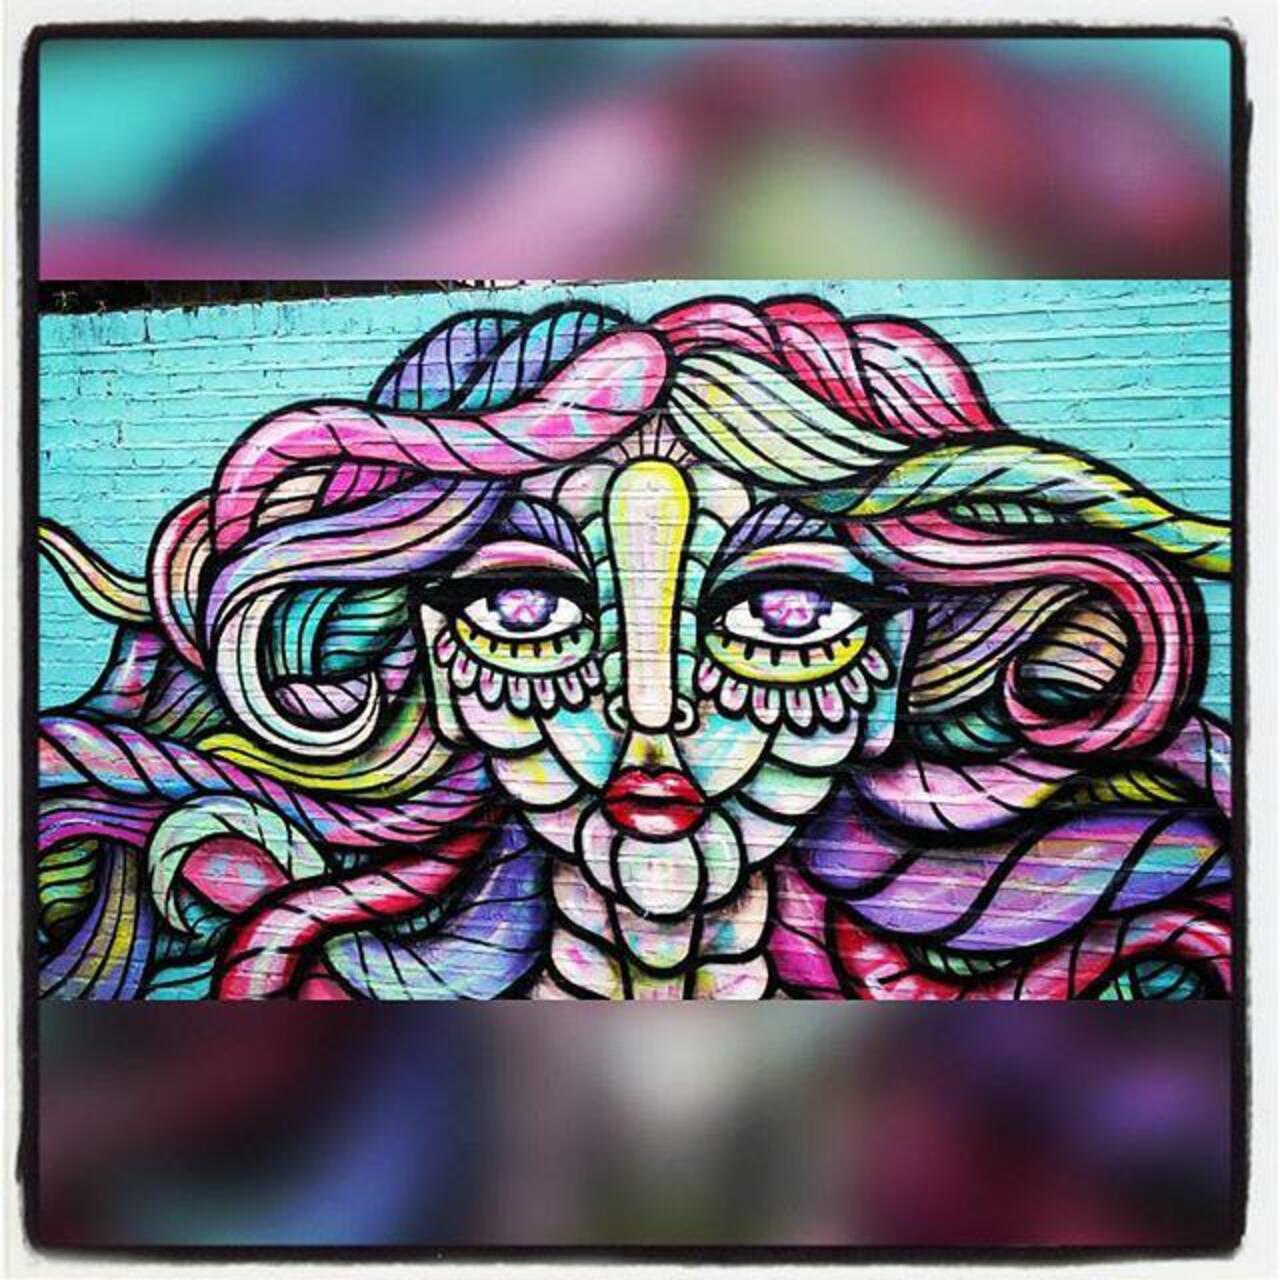 #streetart #london #amarapordios #girl #face #eyes #england #londonstreetart #street #art #streetartlondon #graffiti http://t.co/UJgGQfTaIh